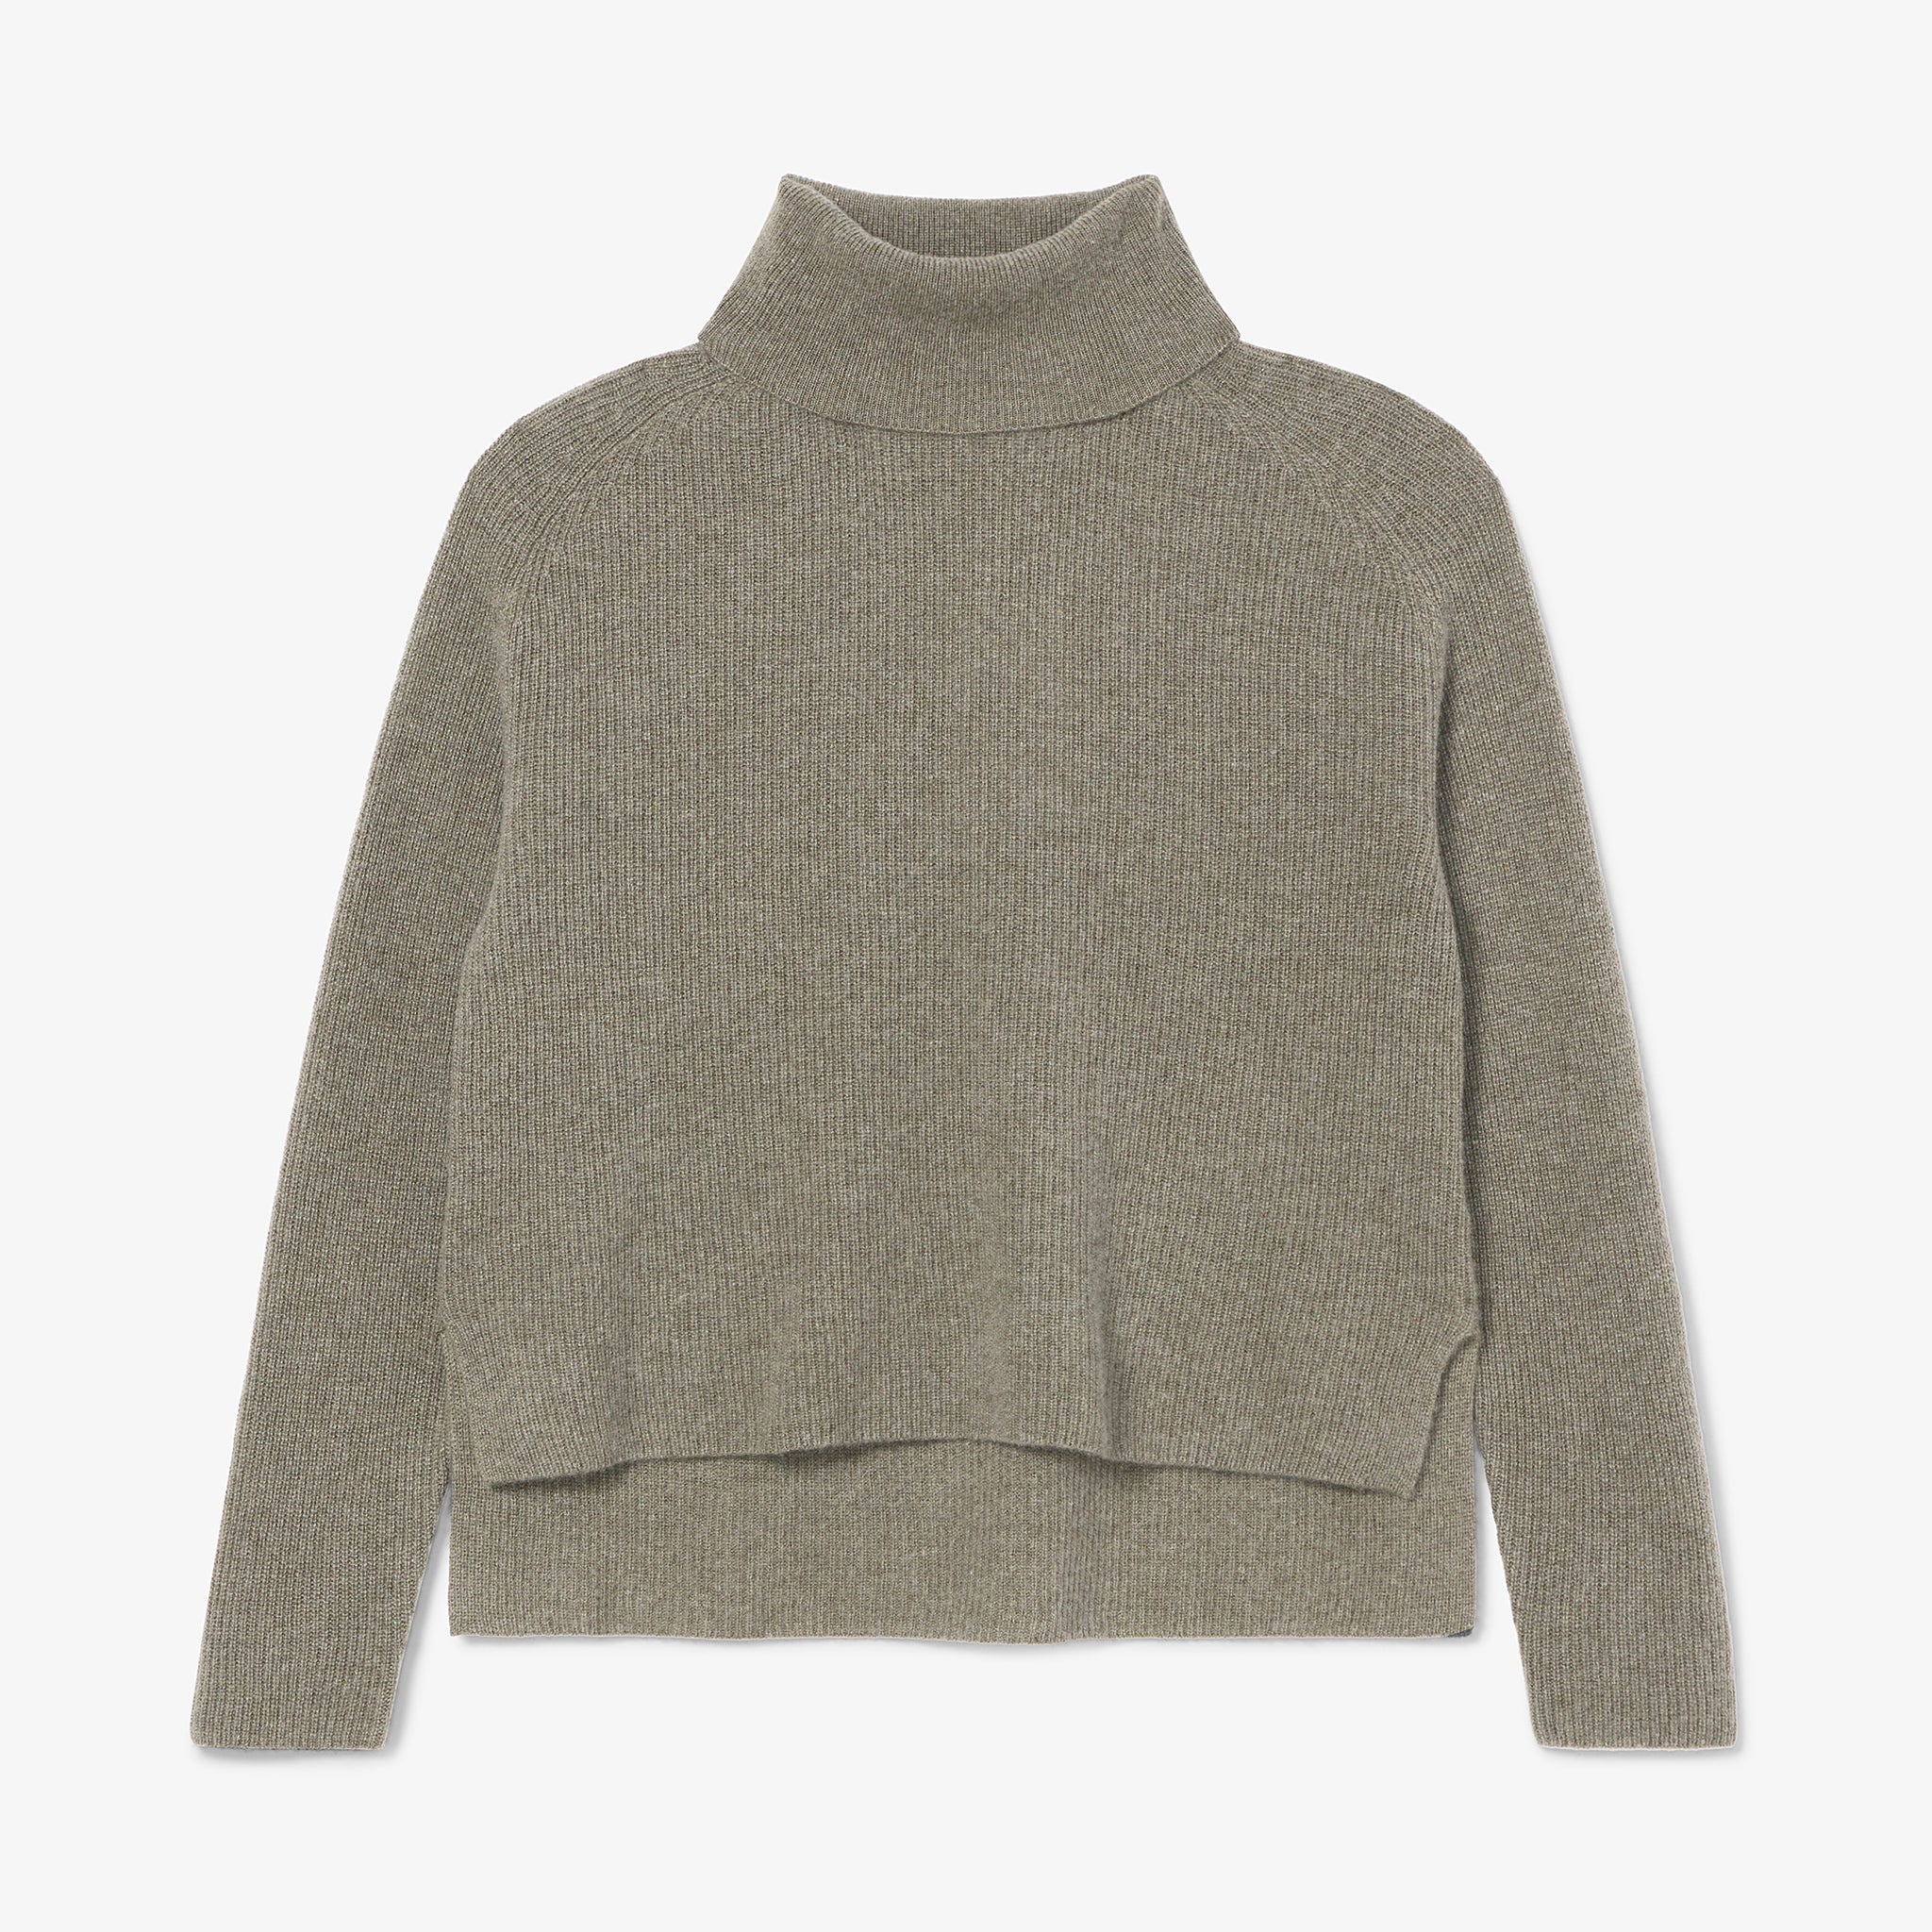 Packshot image of the arbus sweater in dark moss